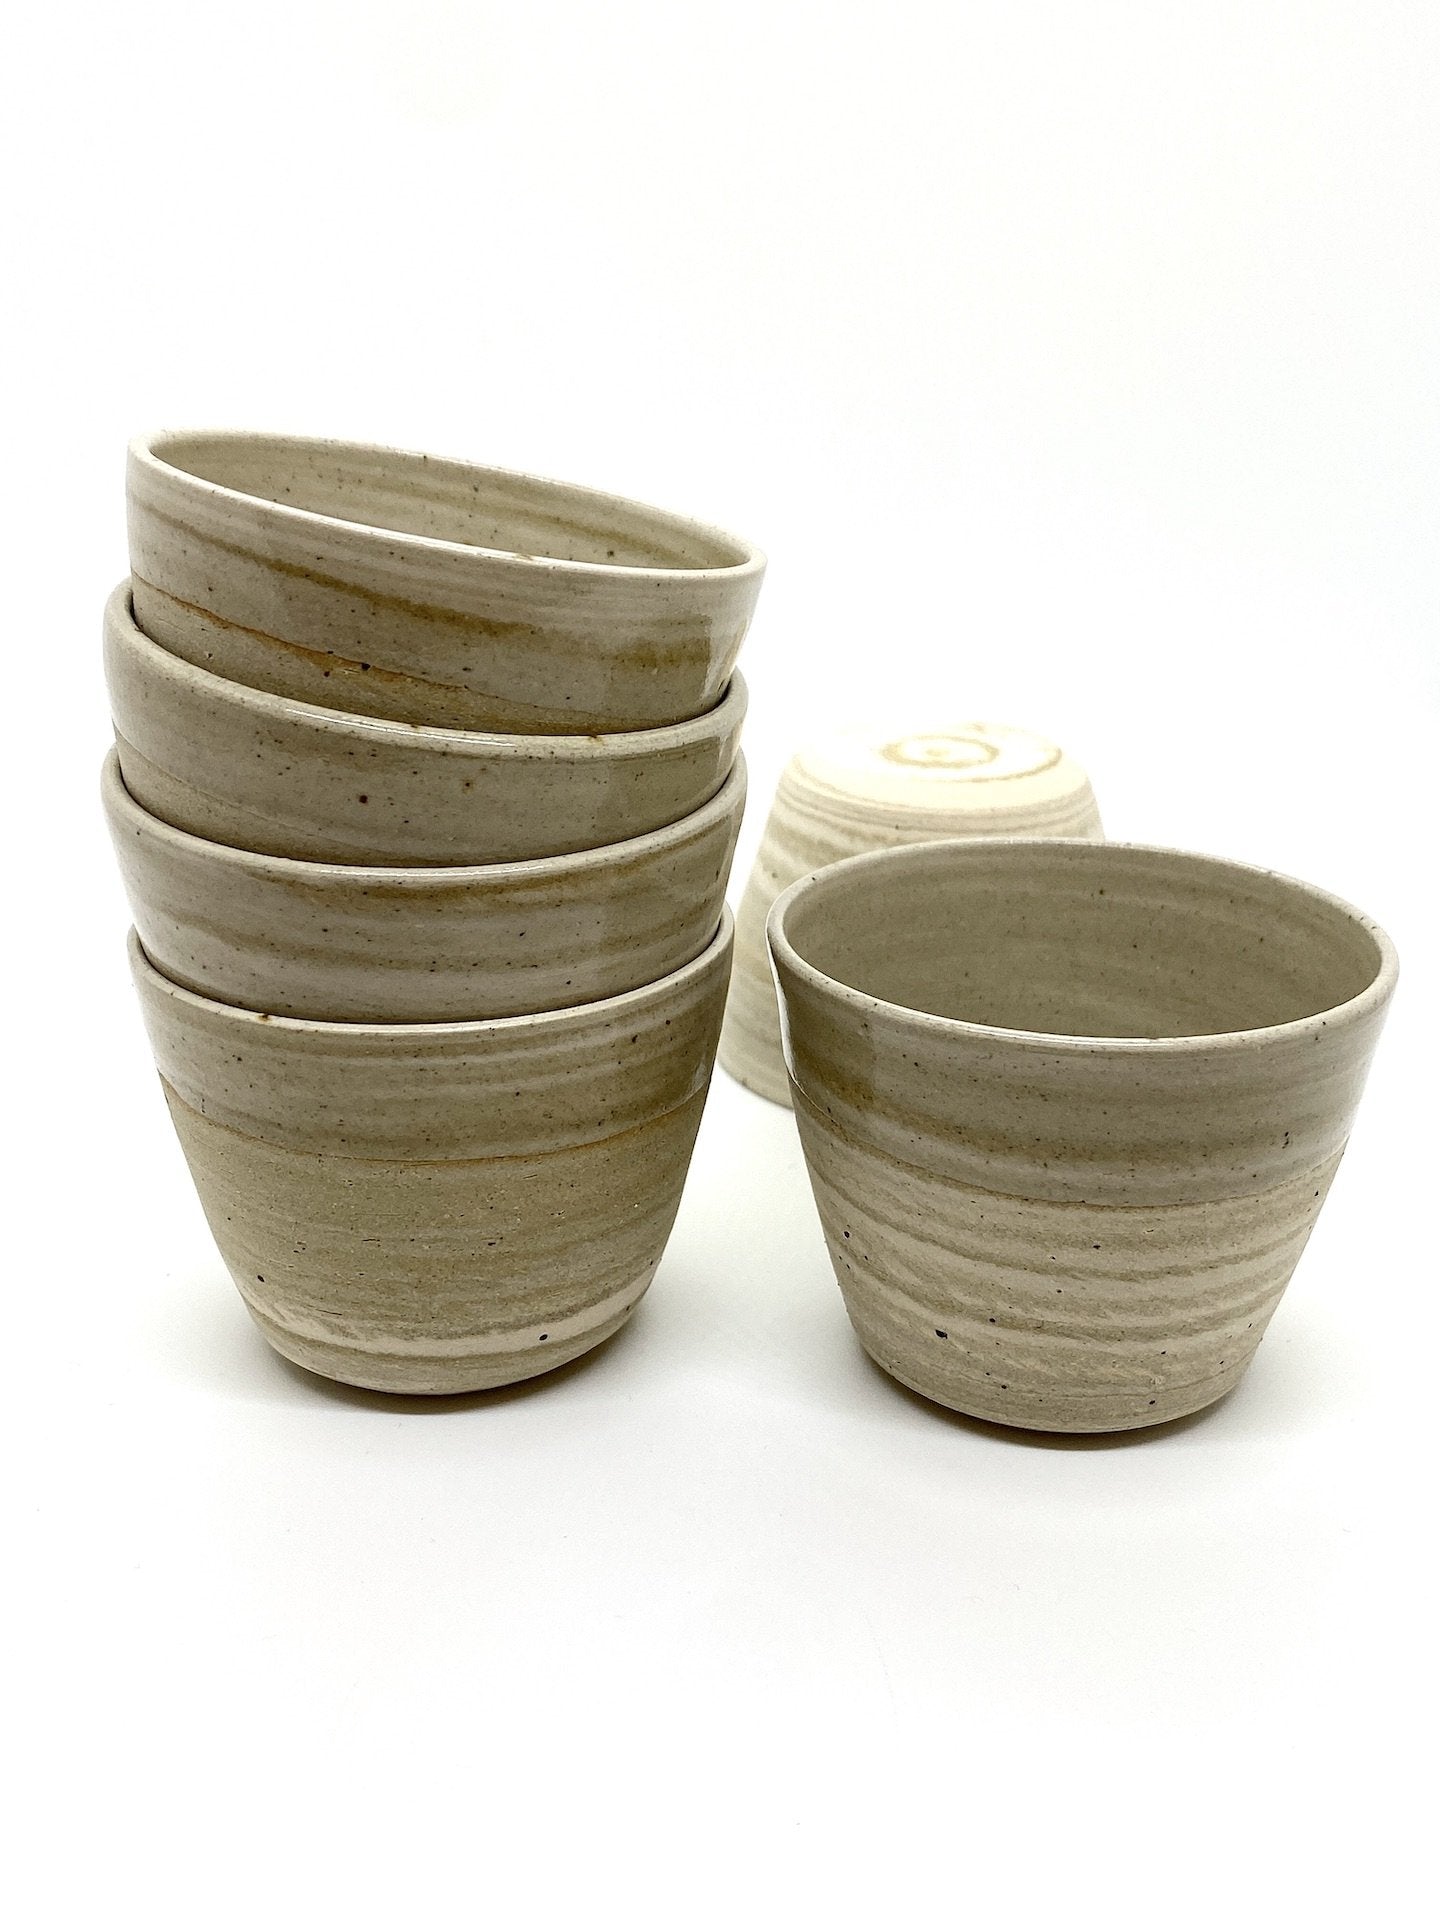 Small Cup | Handleless | #3SC | Espresso Size | Ceramic | by Emporium Julium - Lifestory - Emporium Julium